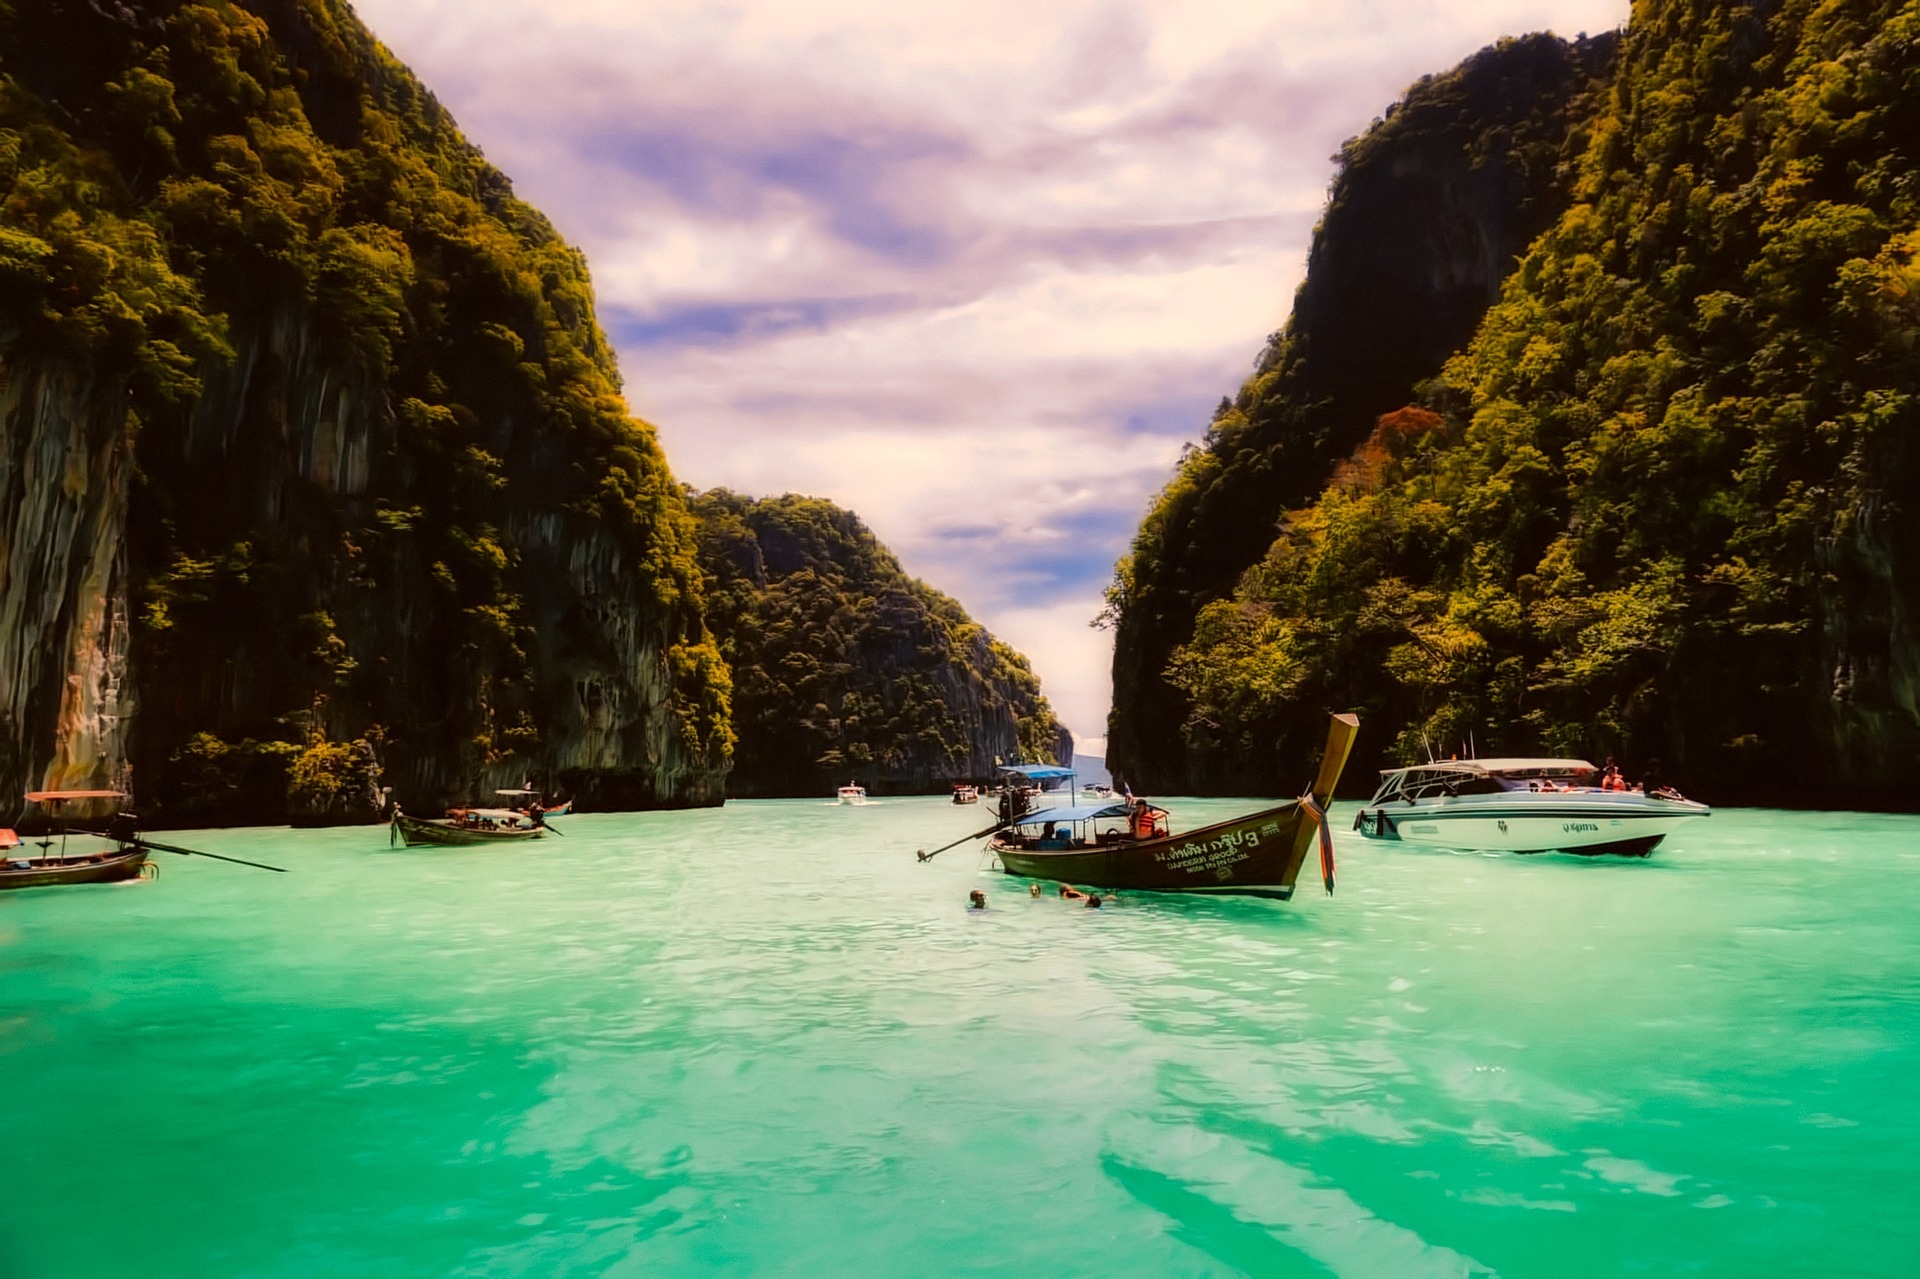 https://pixabay.com/en/thailand-tropical-boats-fishing-2707555/